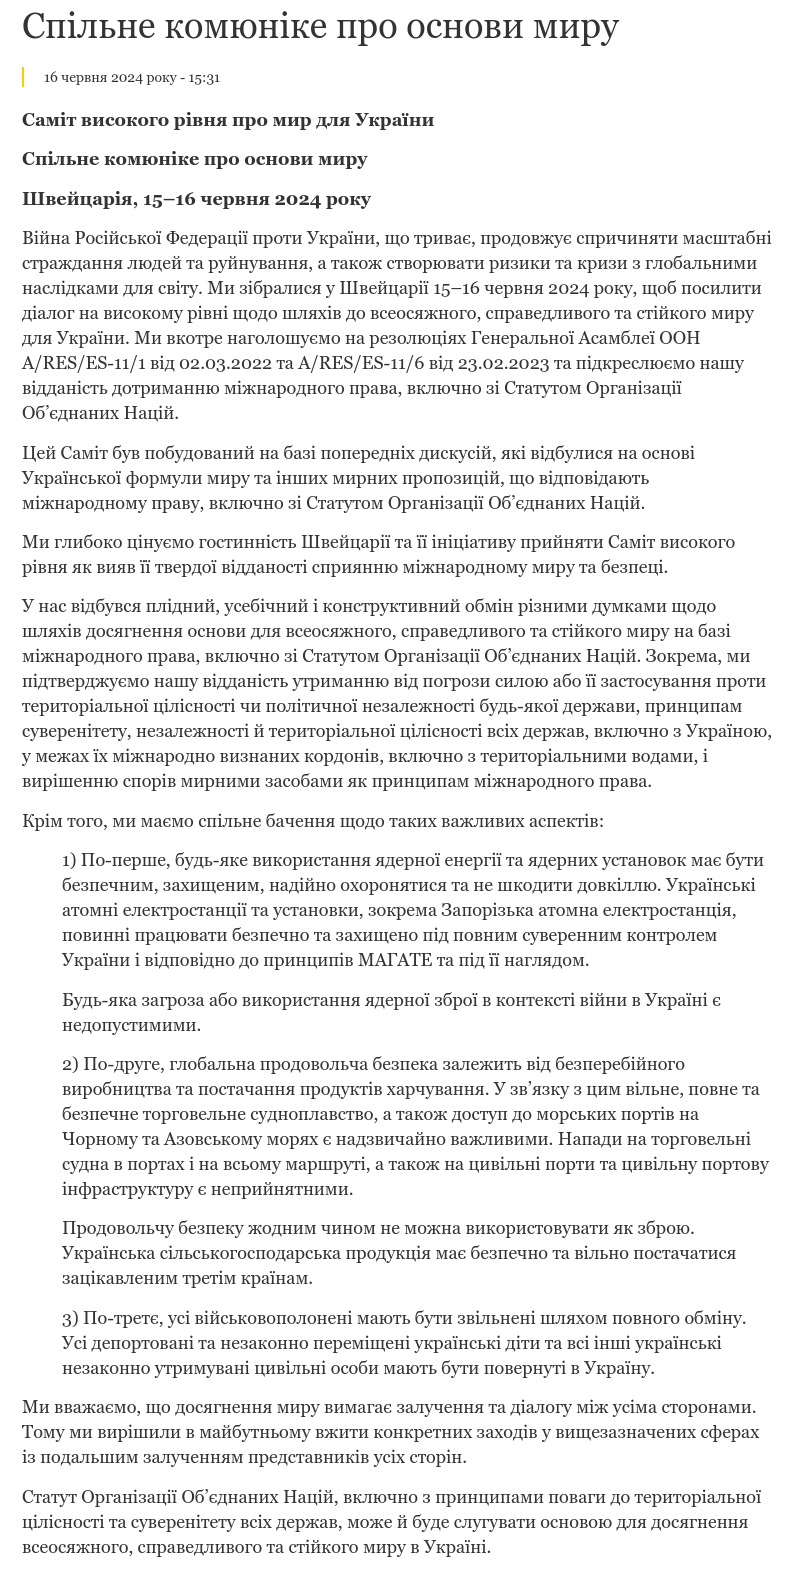 Снимок публикации на president.gov.ua